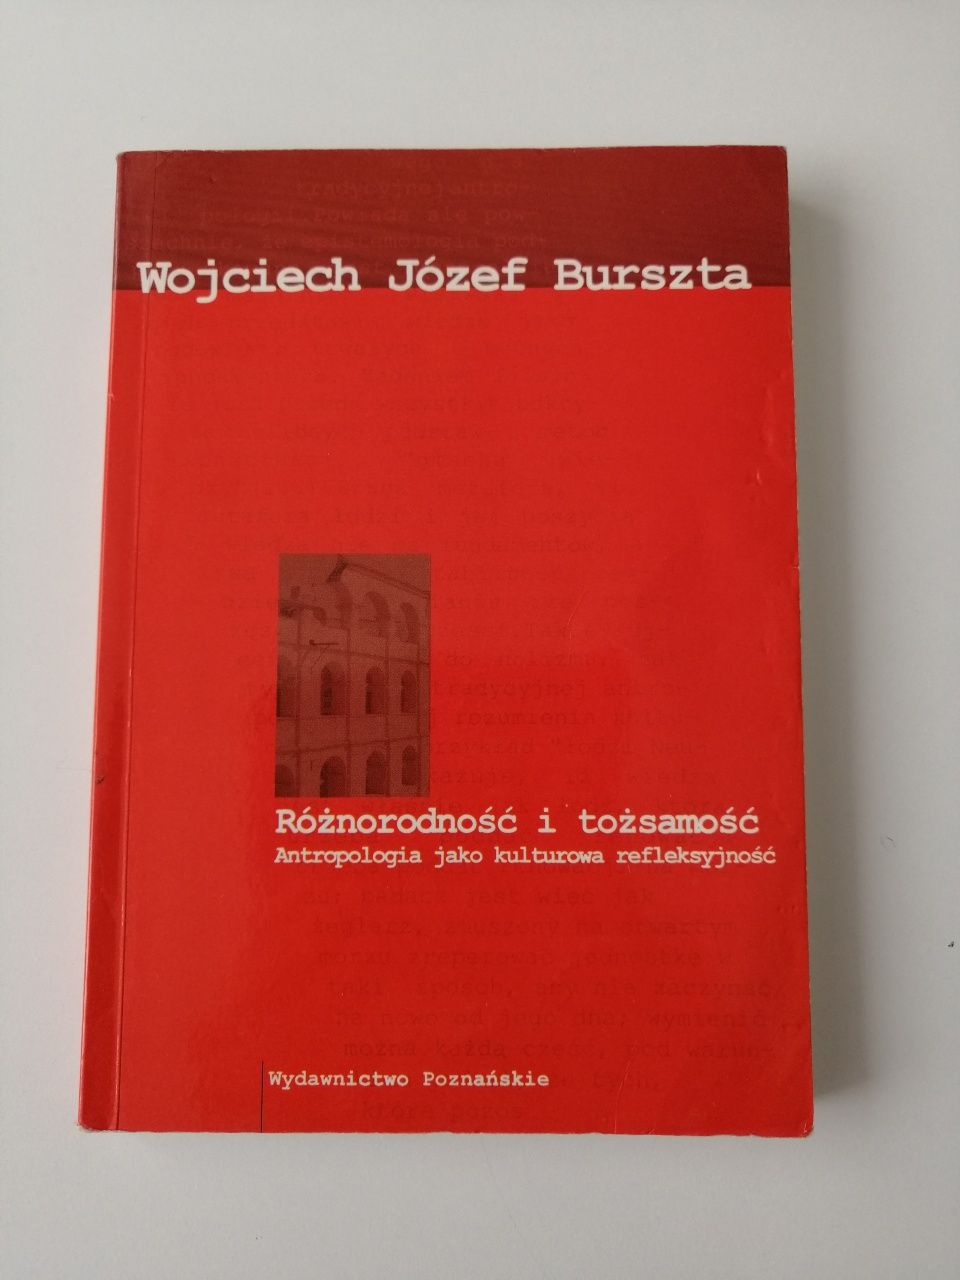 Książka "Różnorodność i tożsamość" W. Burszta